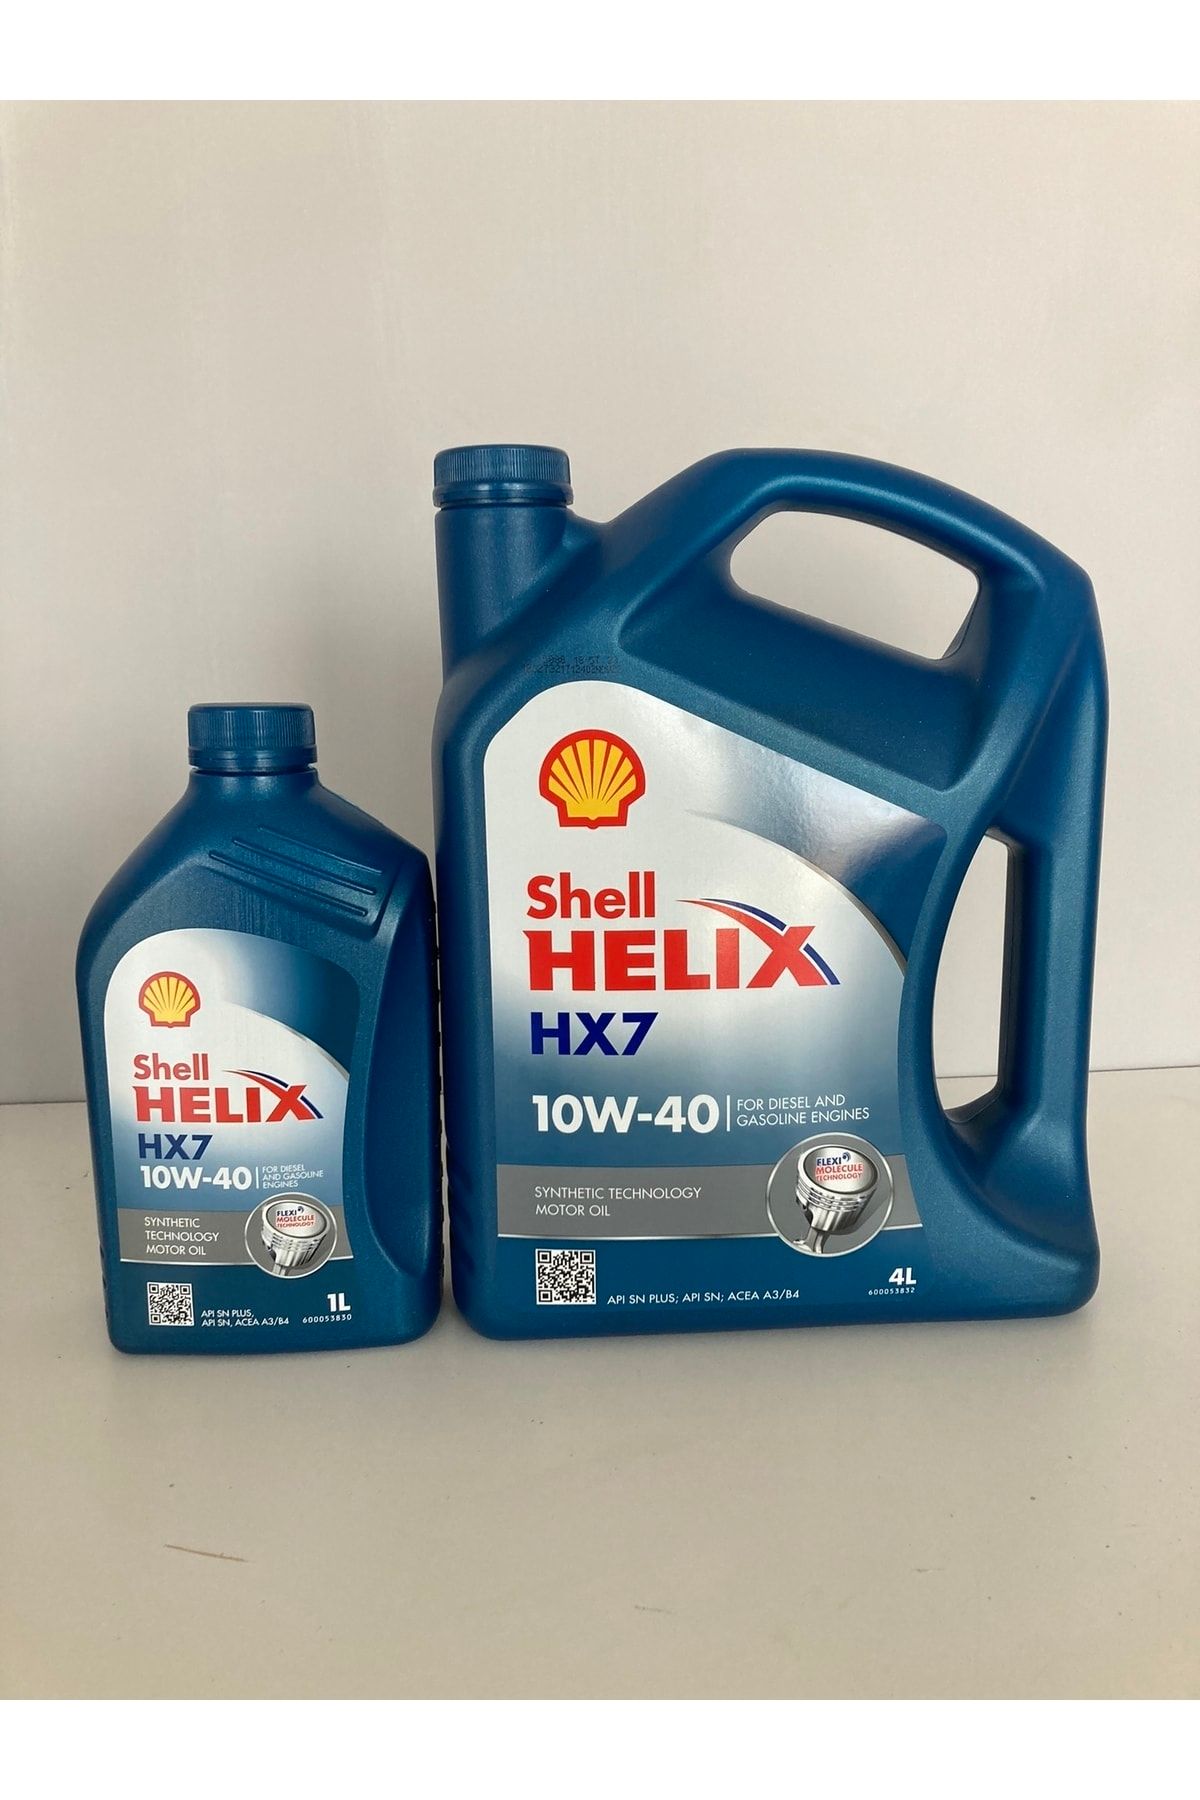 Shell Helix Hx7 10w-40 Yarı Sentetik Motor Yağı 4 1 Lt